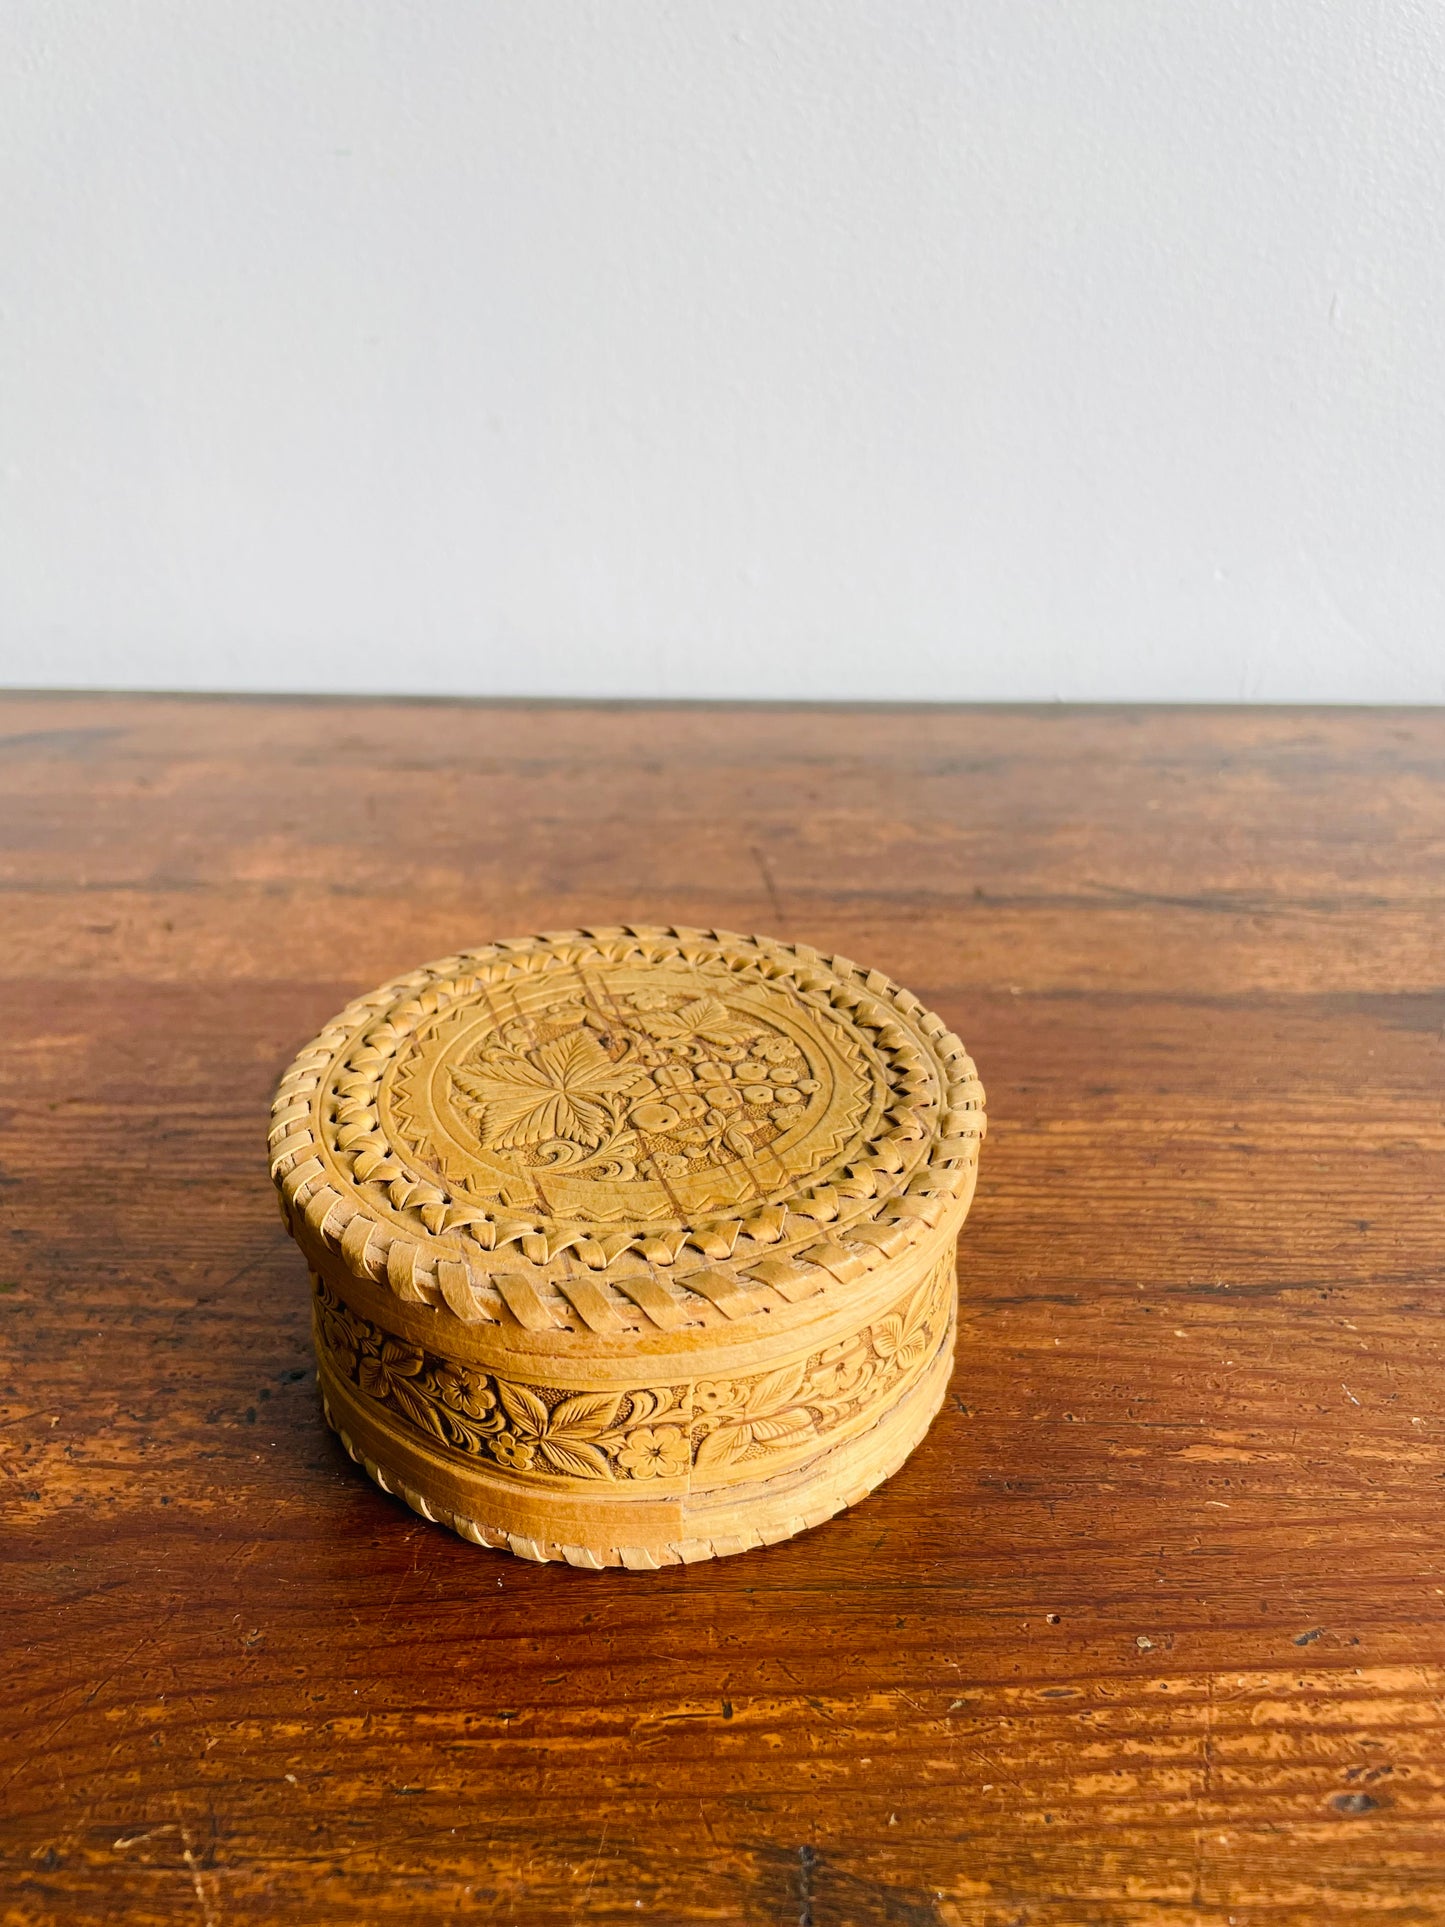 Handmade Round Birch Bark Trinket Box with Lid & Carved Botanical Designs - Found in Lisbon, Portugal